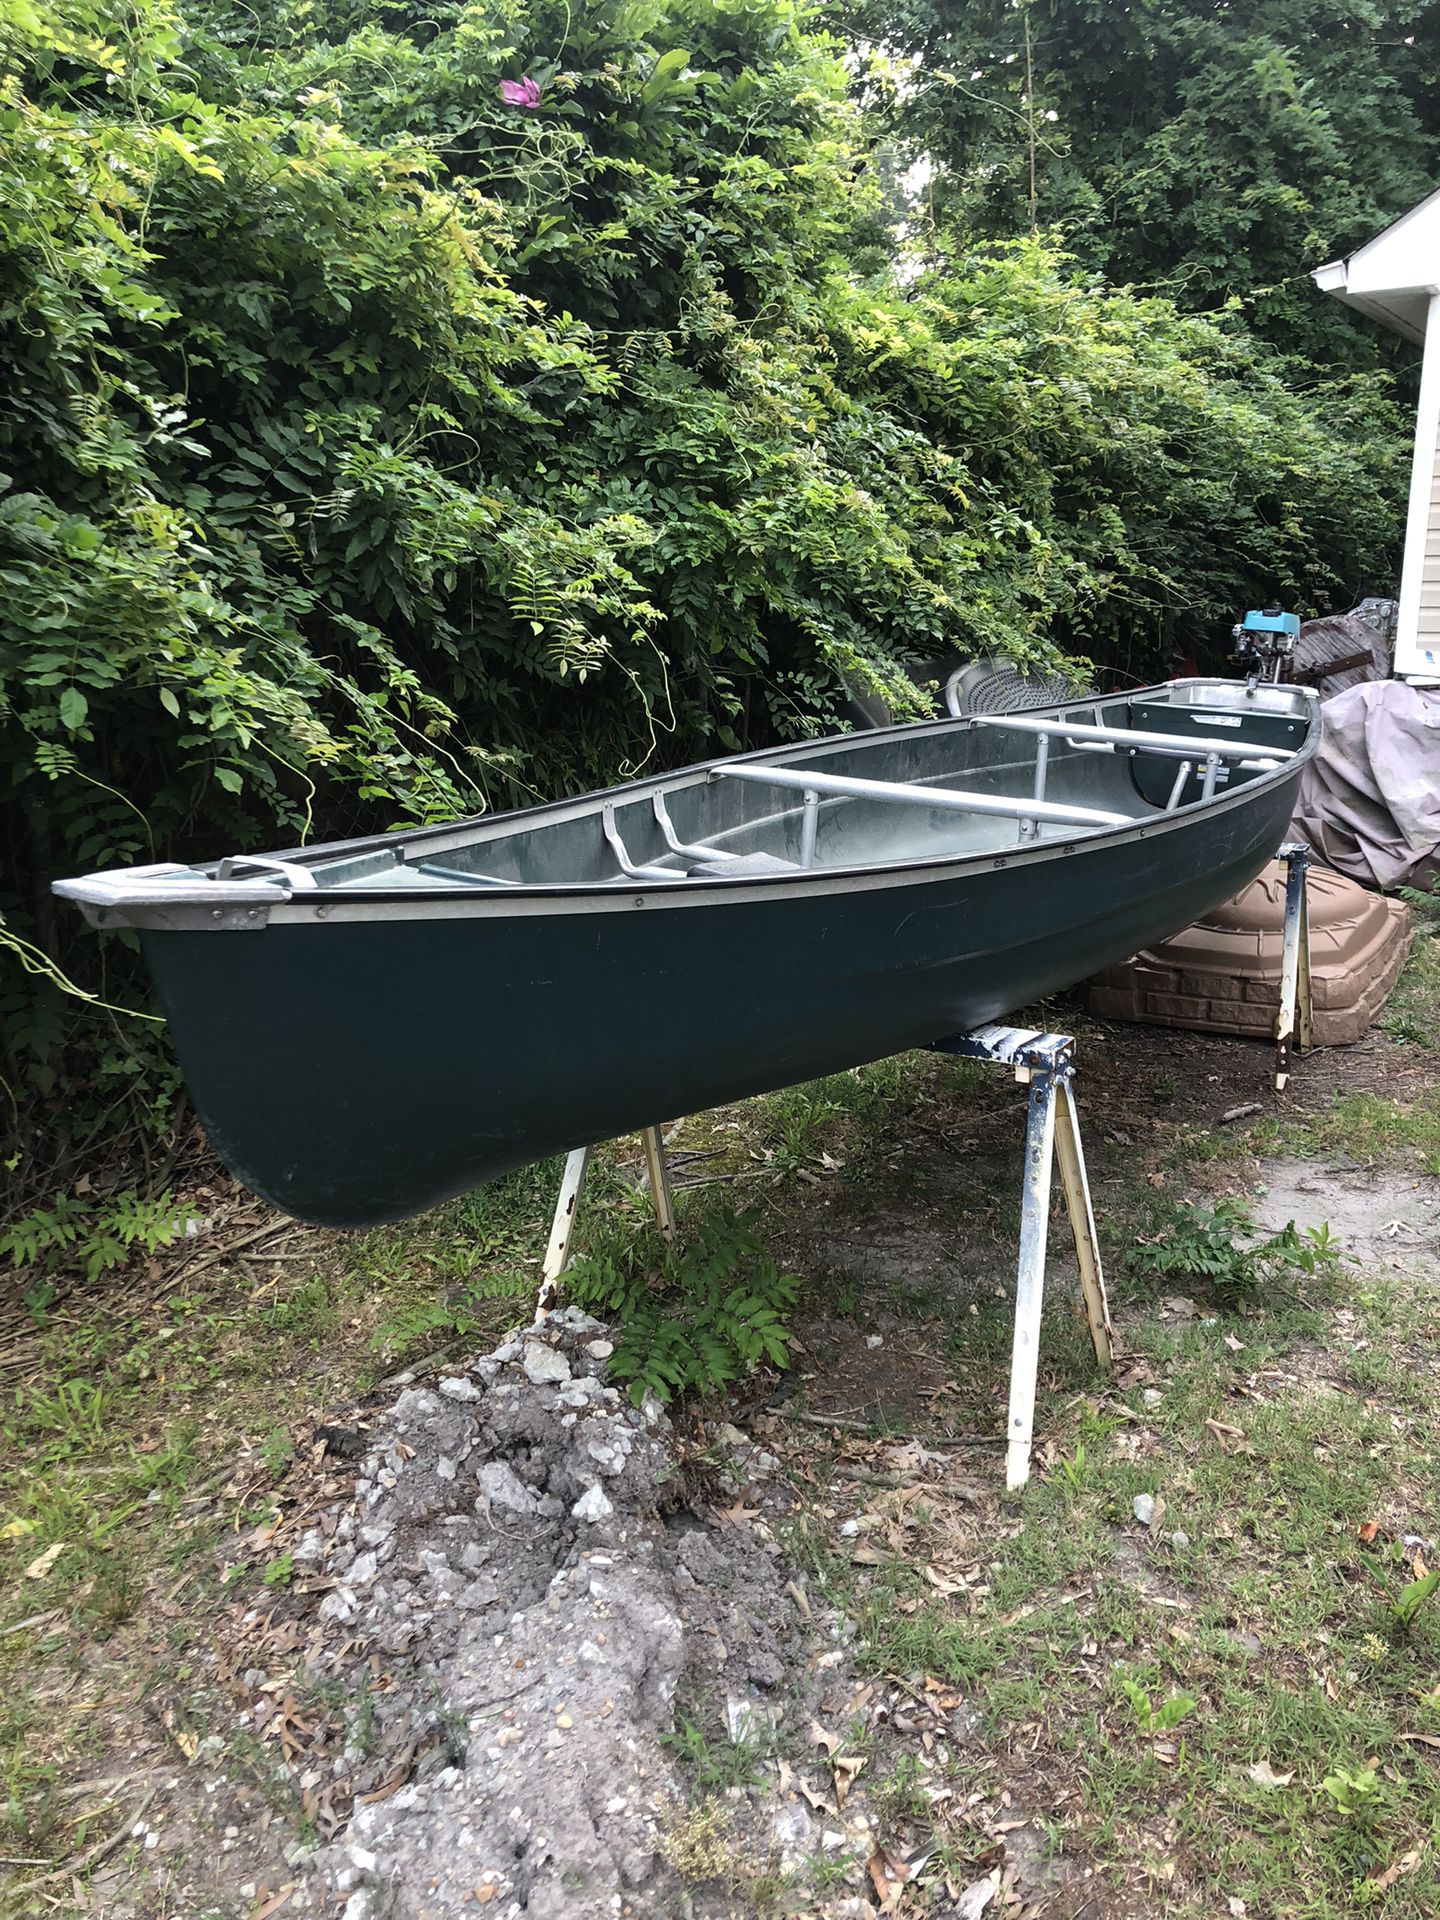 Scanoe With 1.5 H.P. Motor And Canoe Dolly